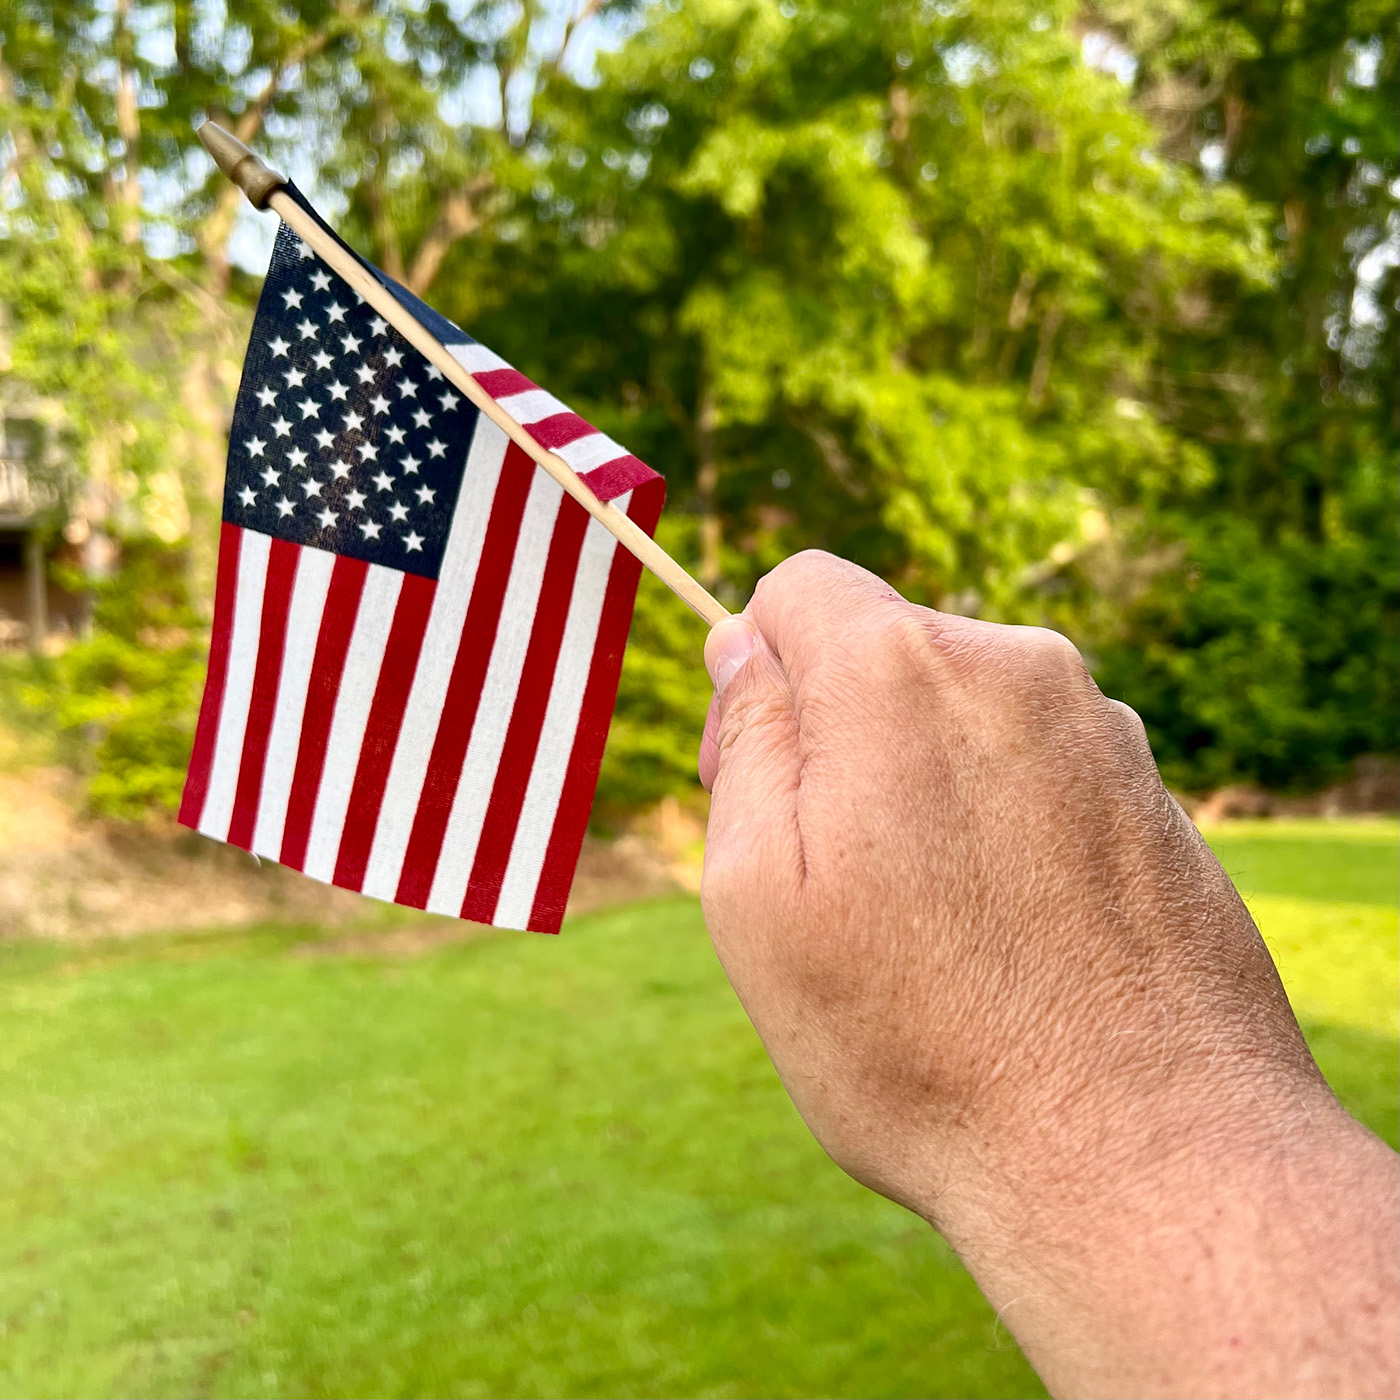 Hand with U.S. flag